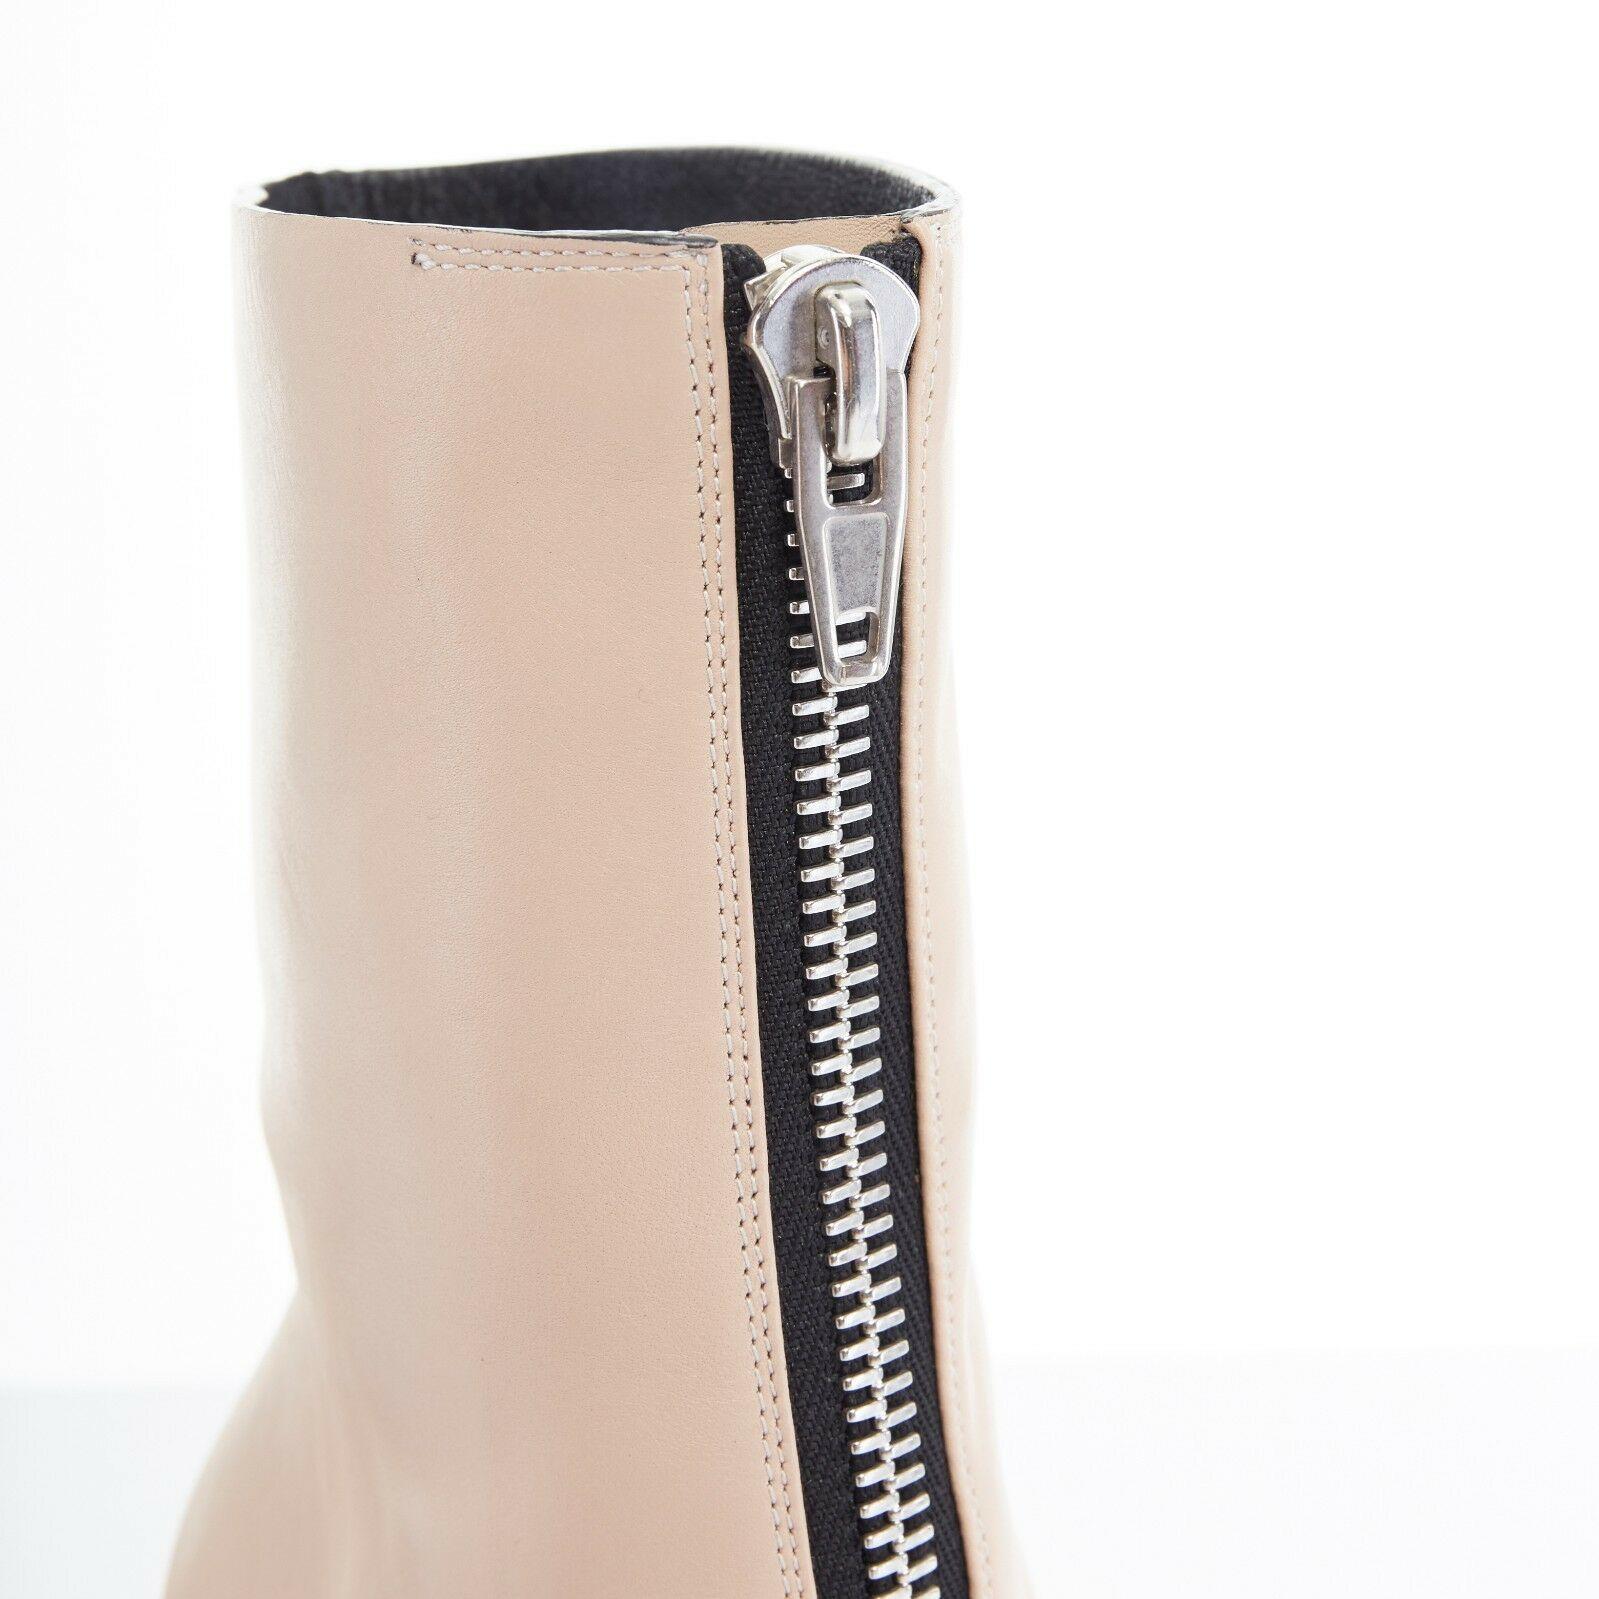 Women's CELINE PHOEBE PHILO nude beige leather zip front square toe wedge boot shoe EU36